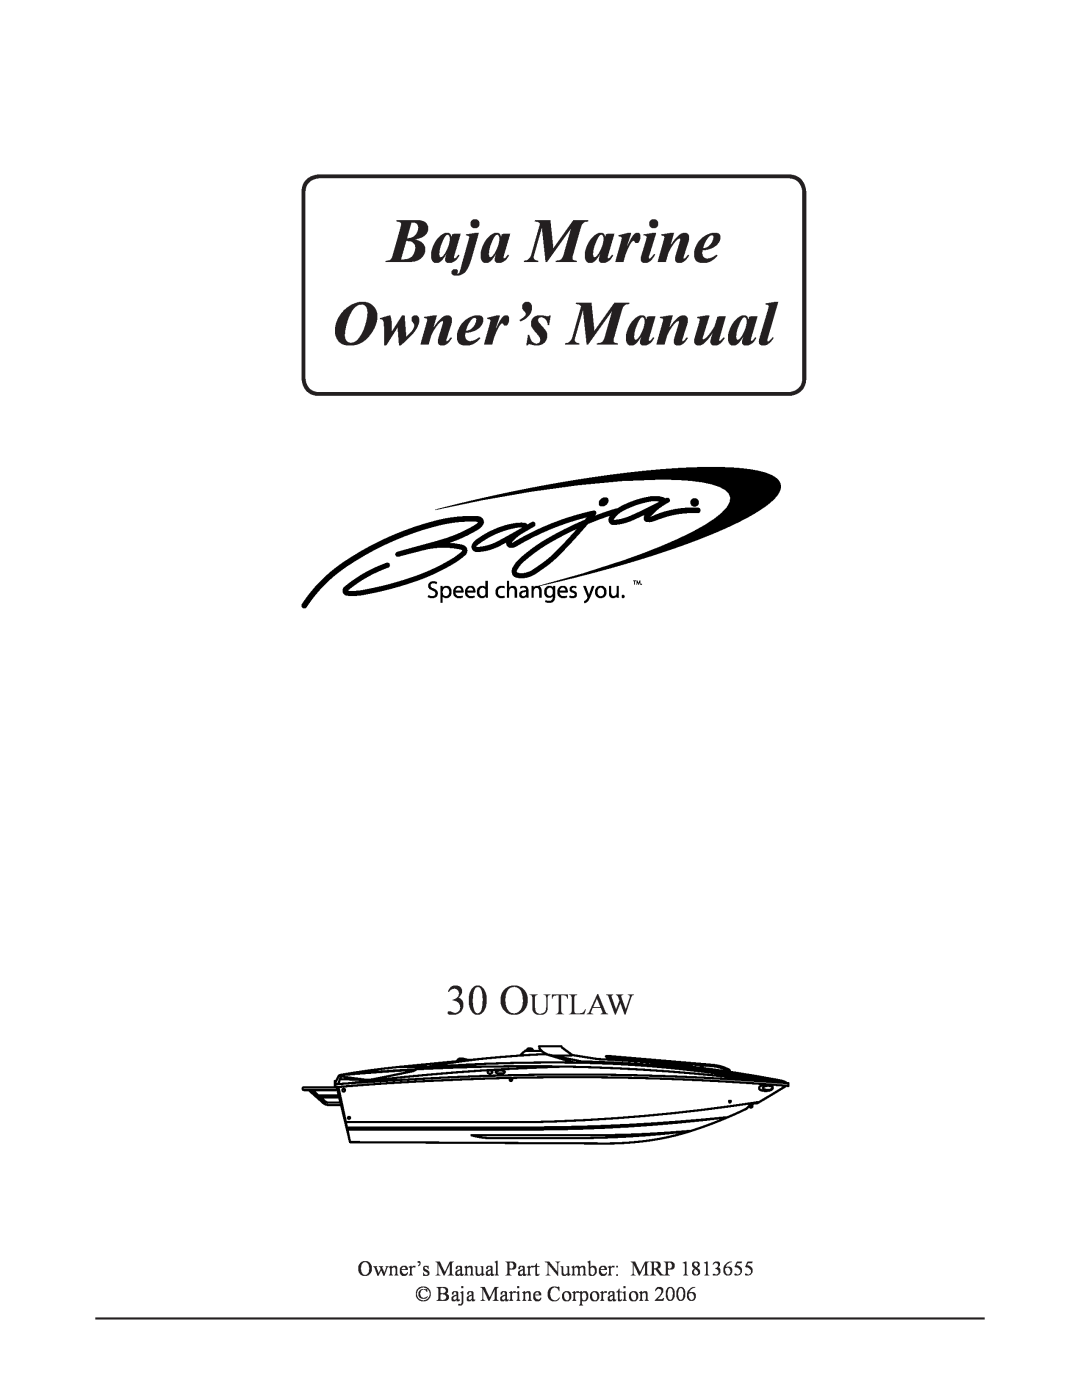 Baja Marine 30 manual Outlaw, Baja Marine Owner’s Manual, Speed changes you. TM 